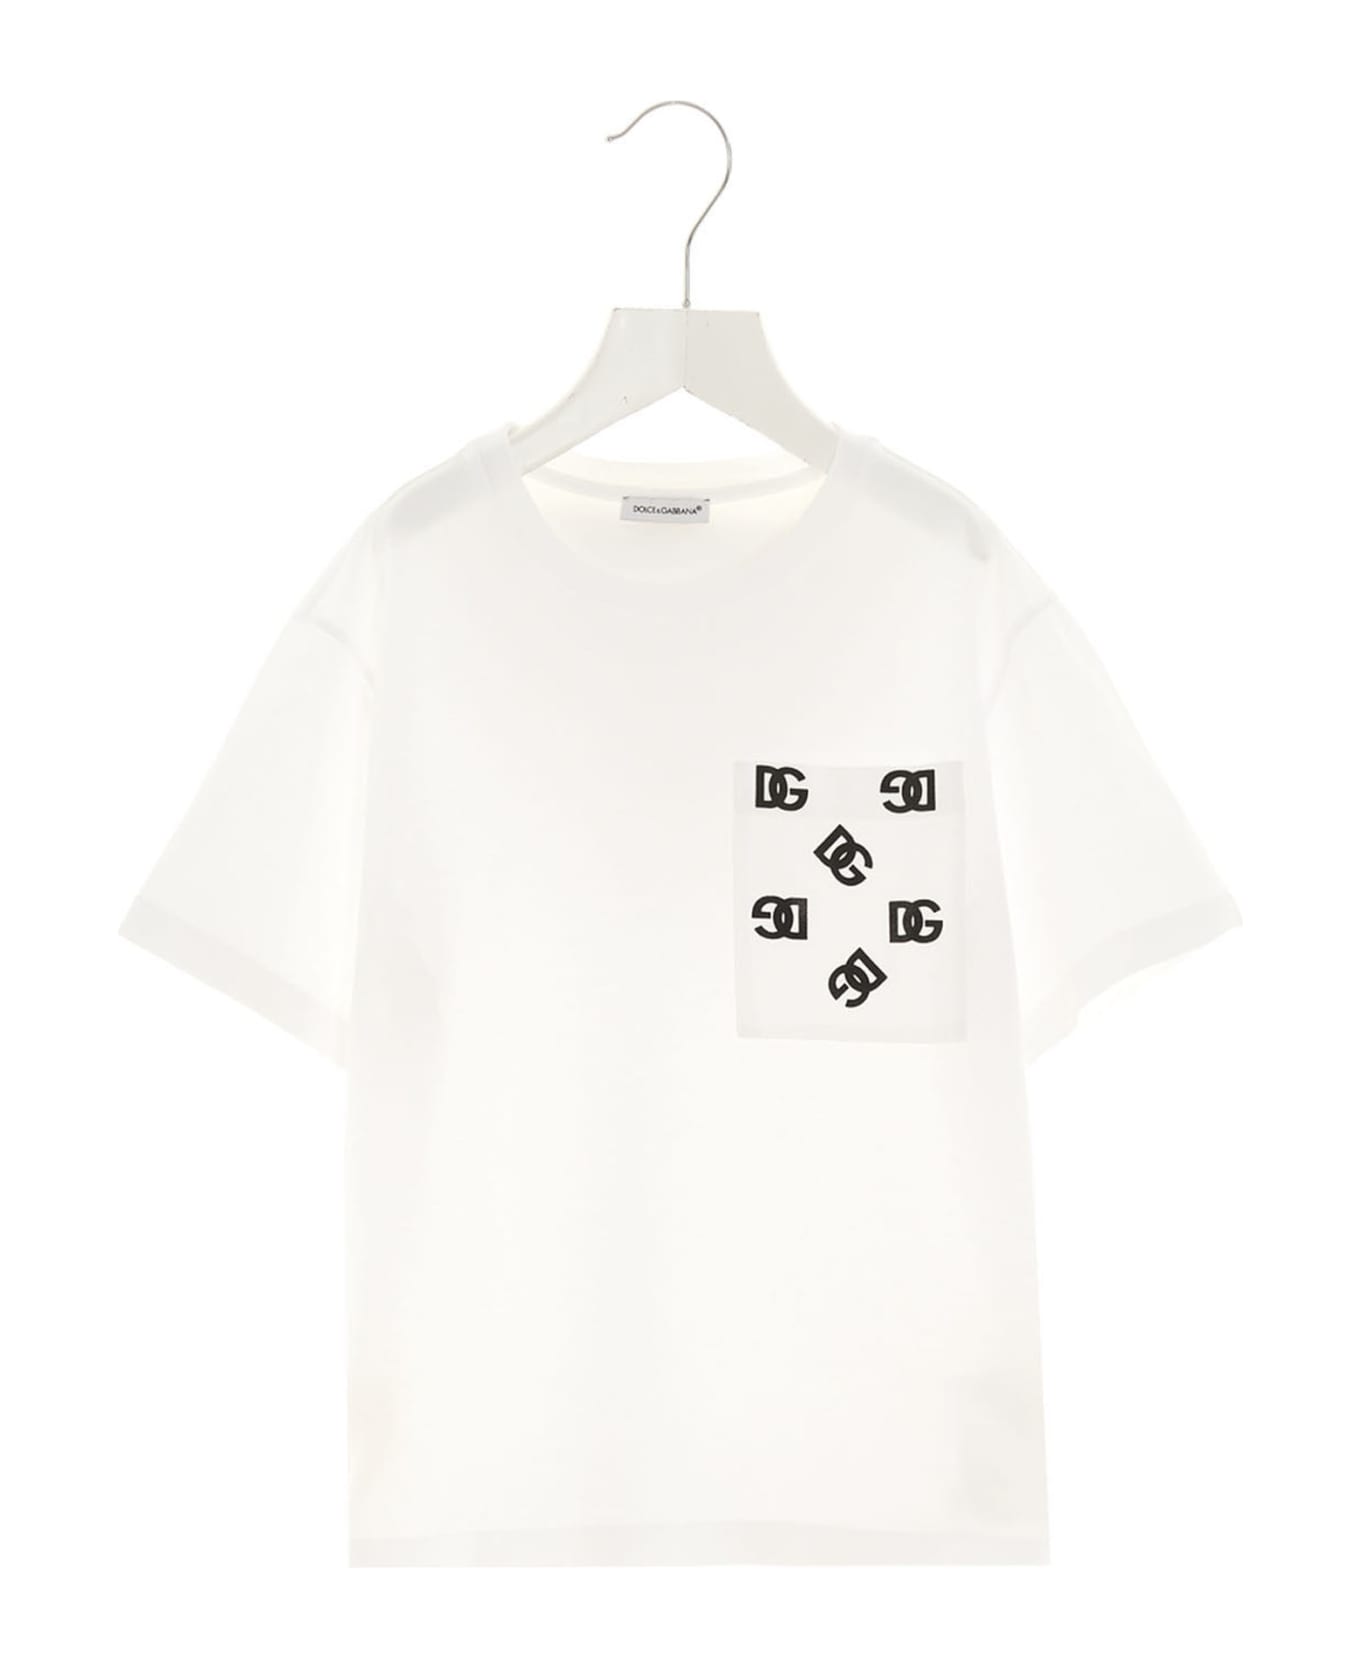 Dolce & Gabbana Logo Pocket T-shirt - White/Black